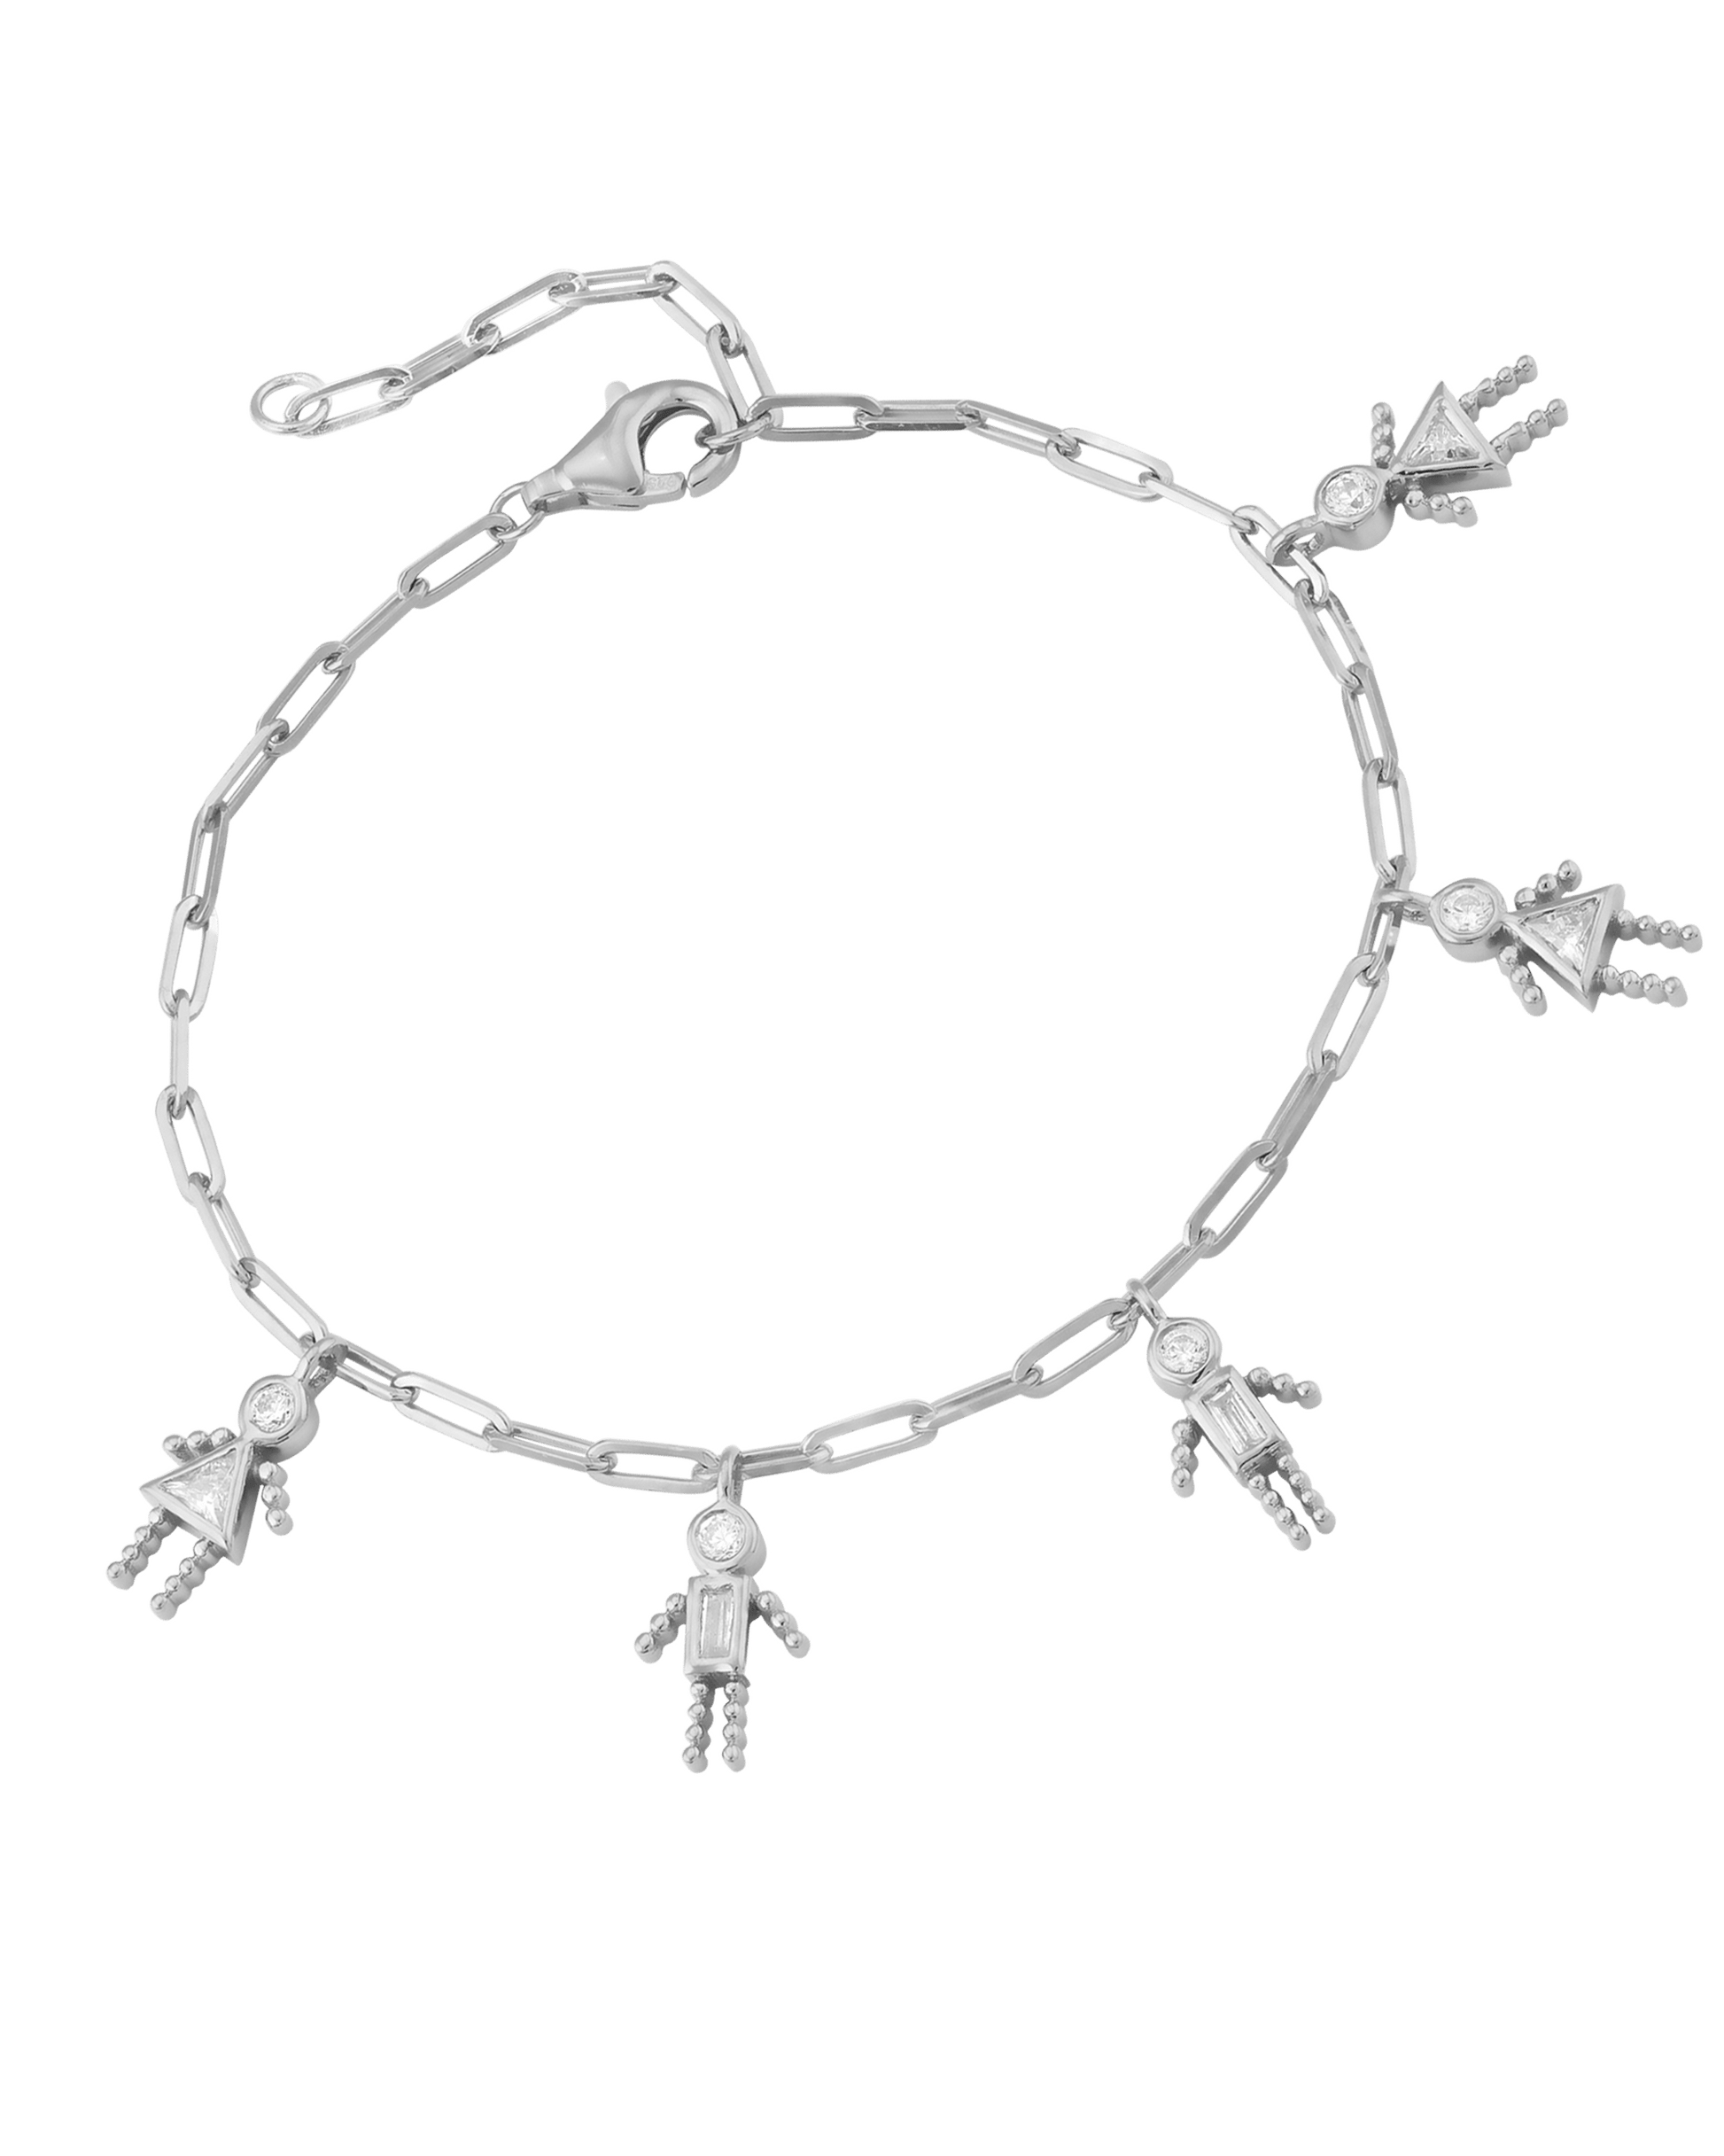 Mini Me Links Bracelet - 925 Sterling Silver Bracelets magal-dev 1 6”+1” extender 